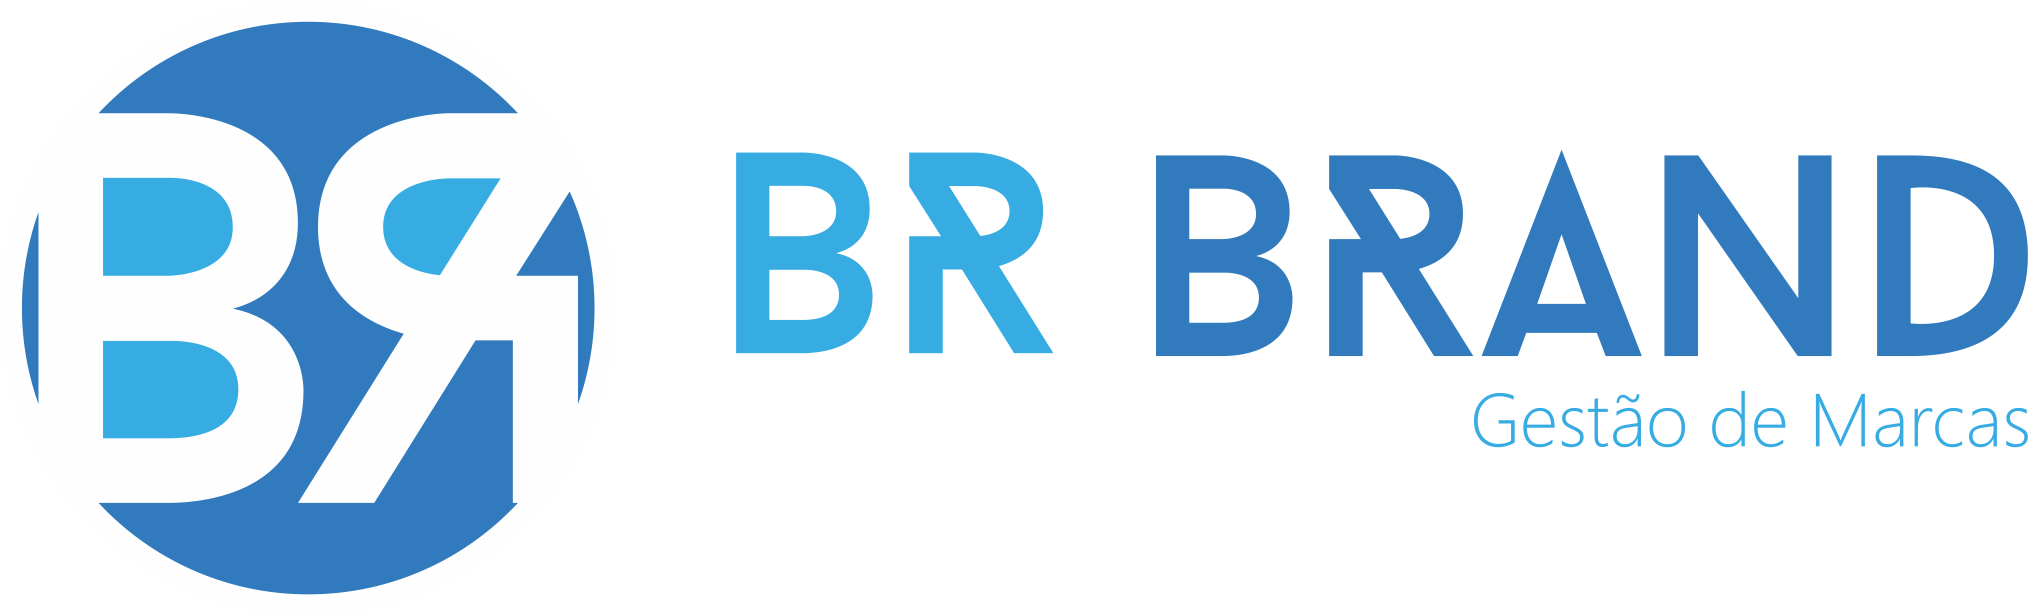 logomarca_brbrand_lat